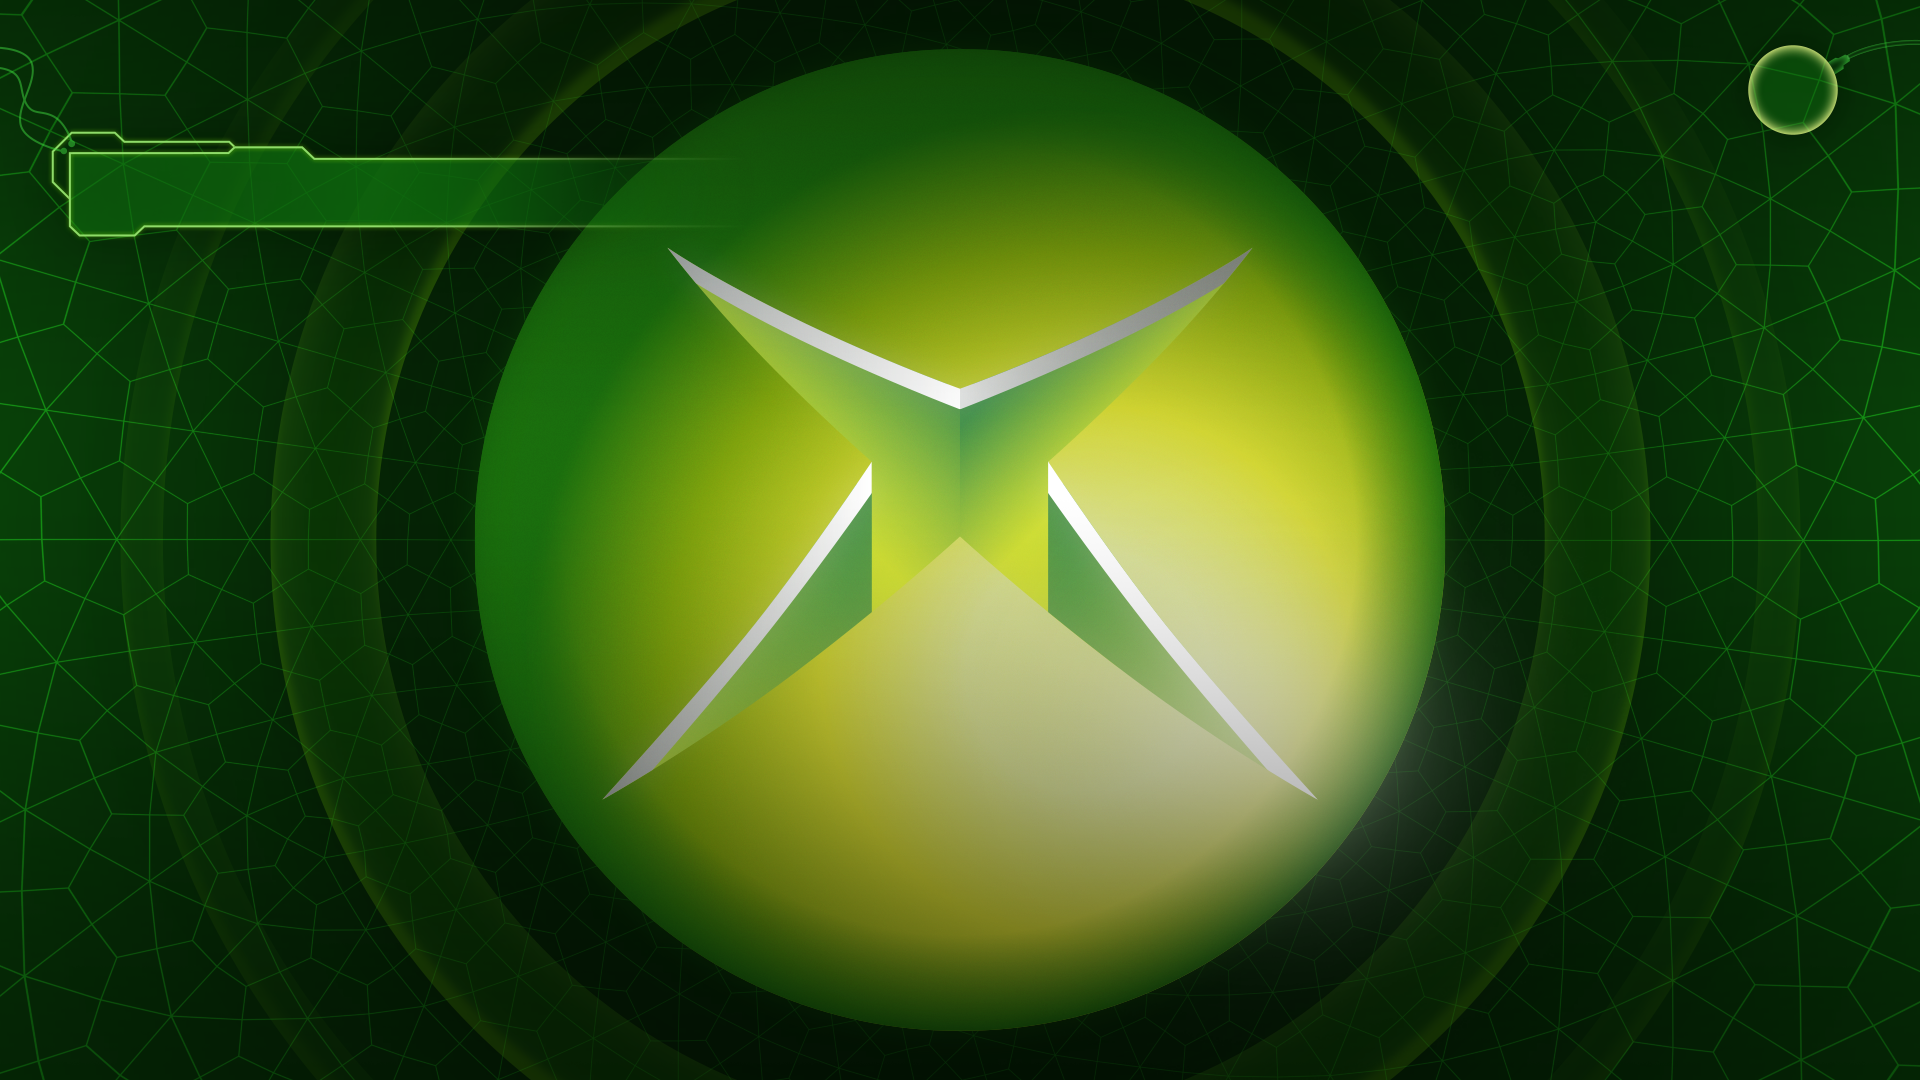 Original Xbox Logo Wallpapers